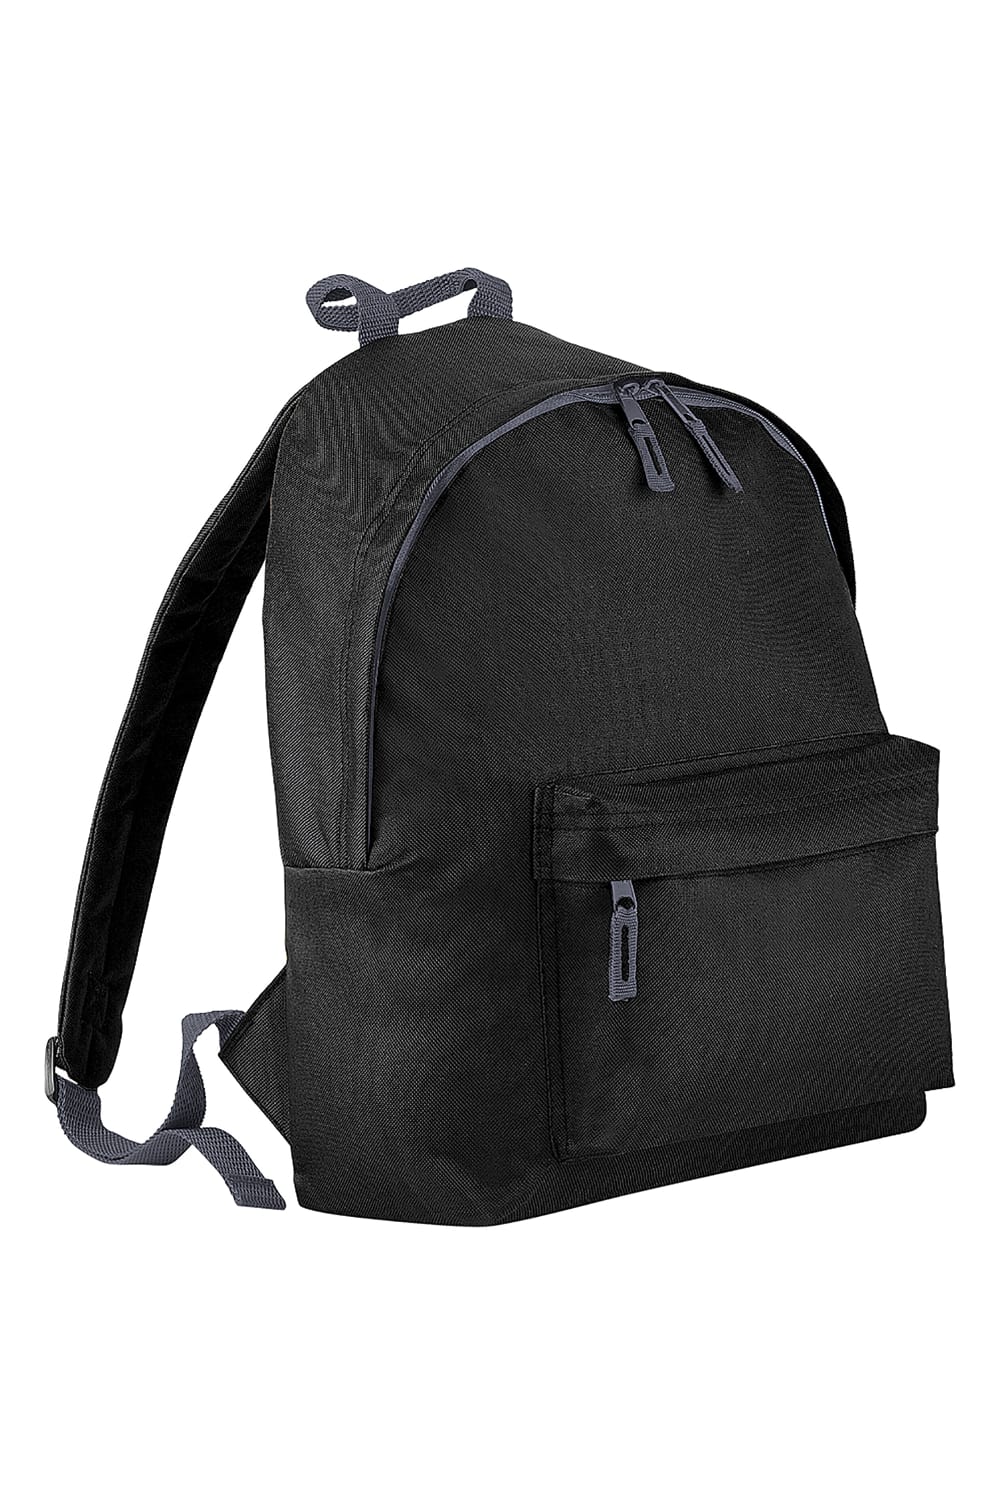 Junior Fashion Backpack/Rucksack, 14 Liters - Black